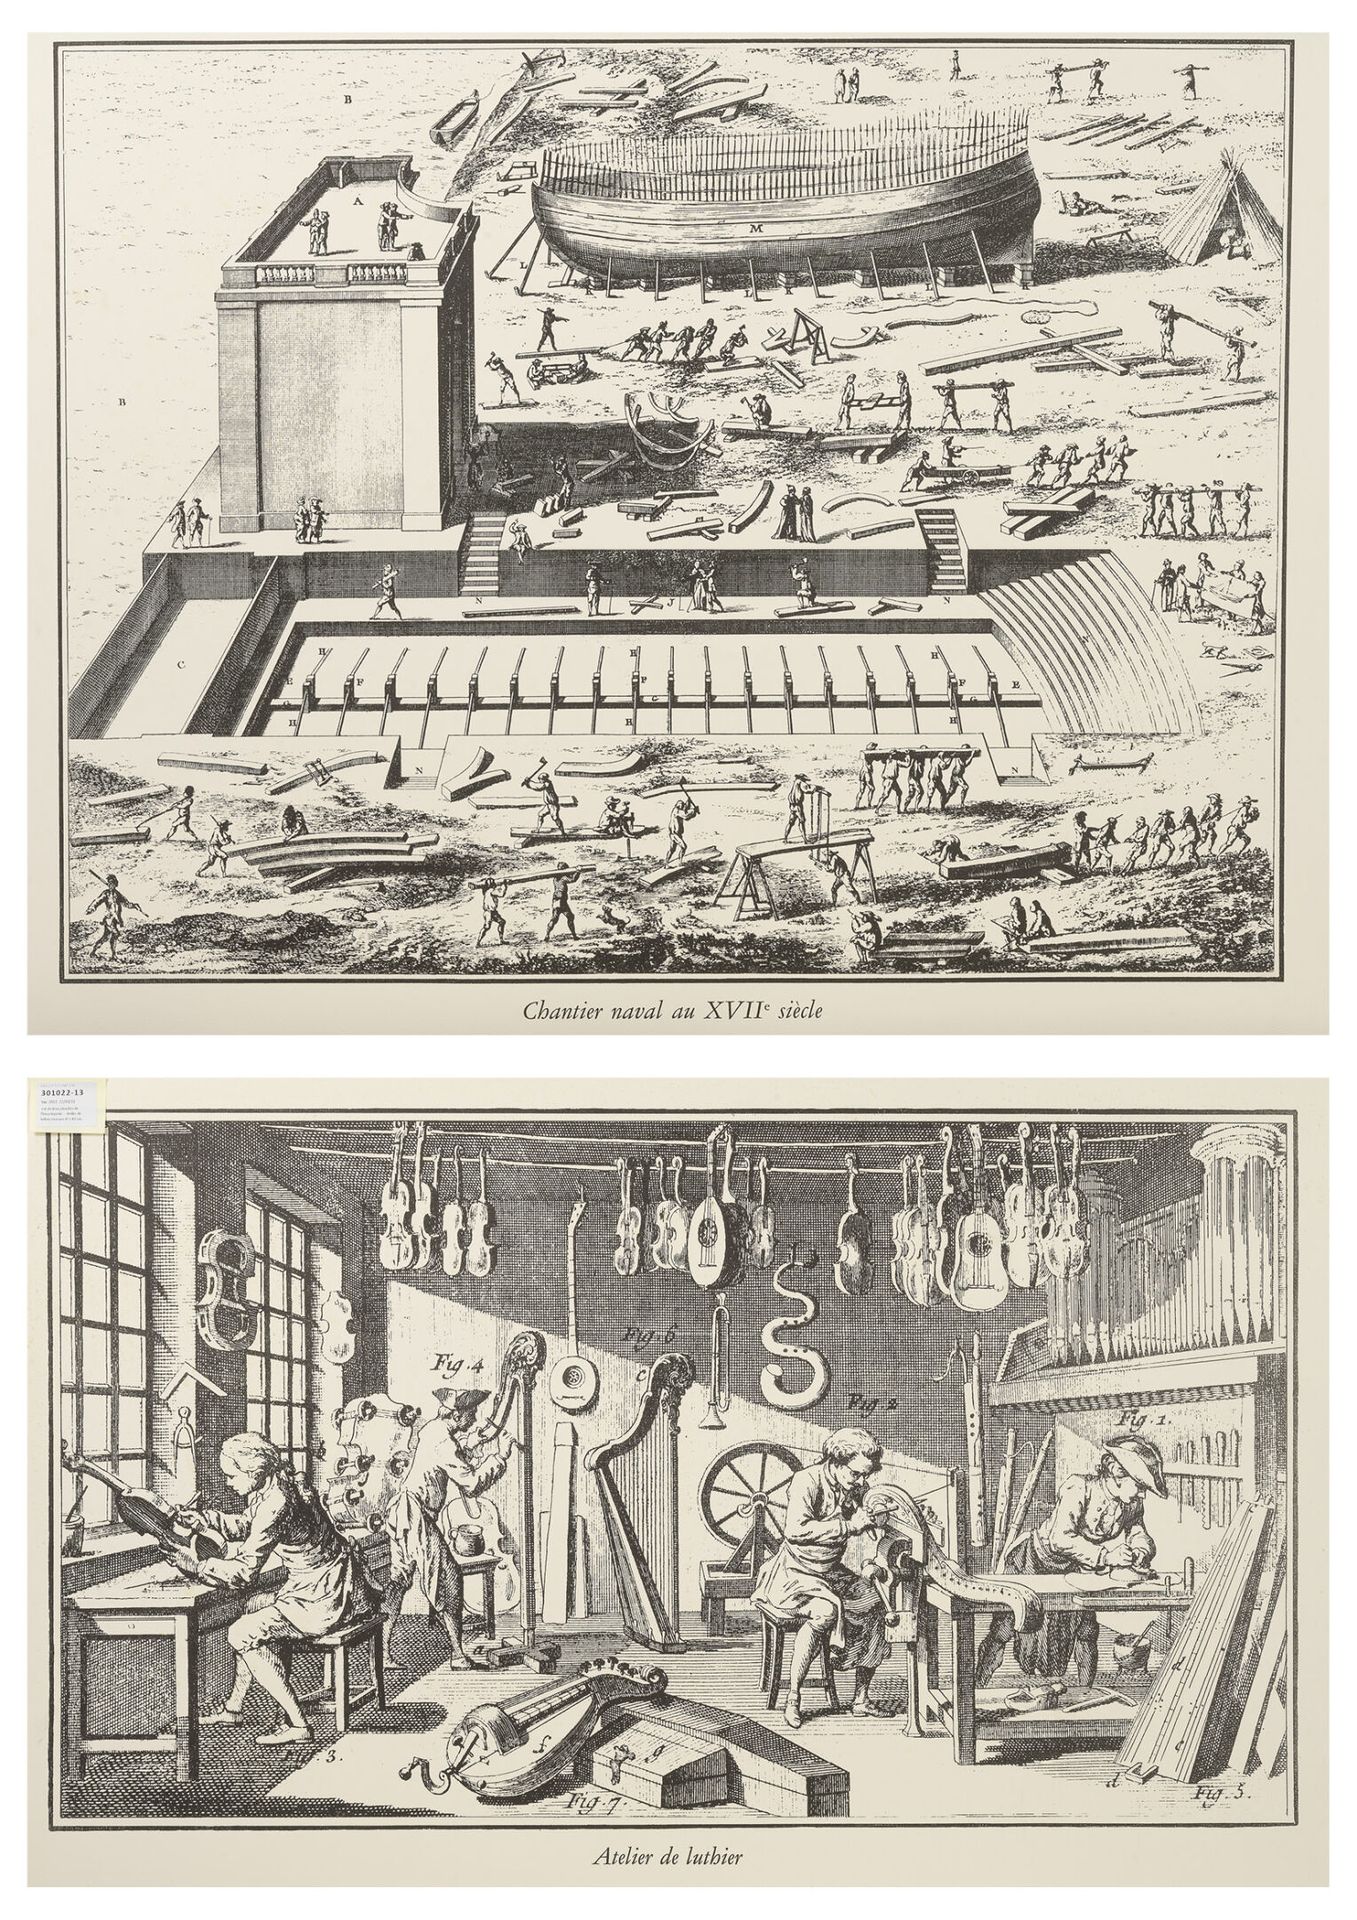 Null 摘自《百科全书》:

- 小提琴制造者的工作室。

主题：47 x 83厘米。

- 17世纪的造船厂。

主题：57 x 74.5厘米。

小污点，&hellip;